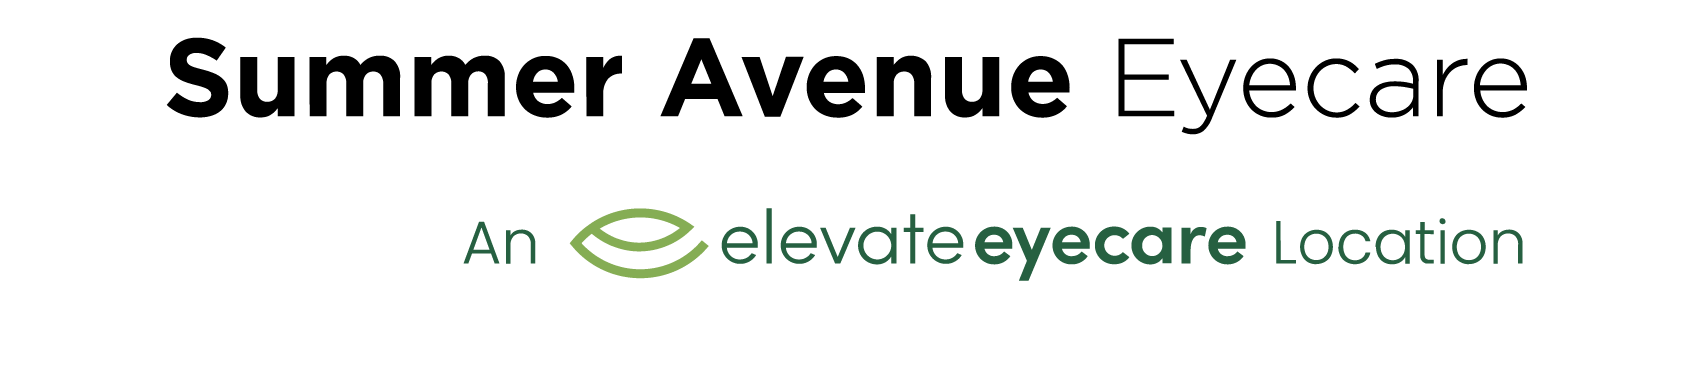 Summer Avenue Eyecare logo